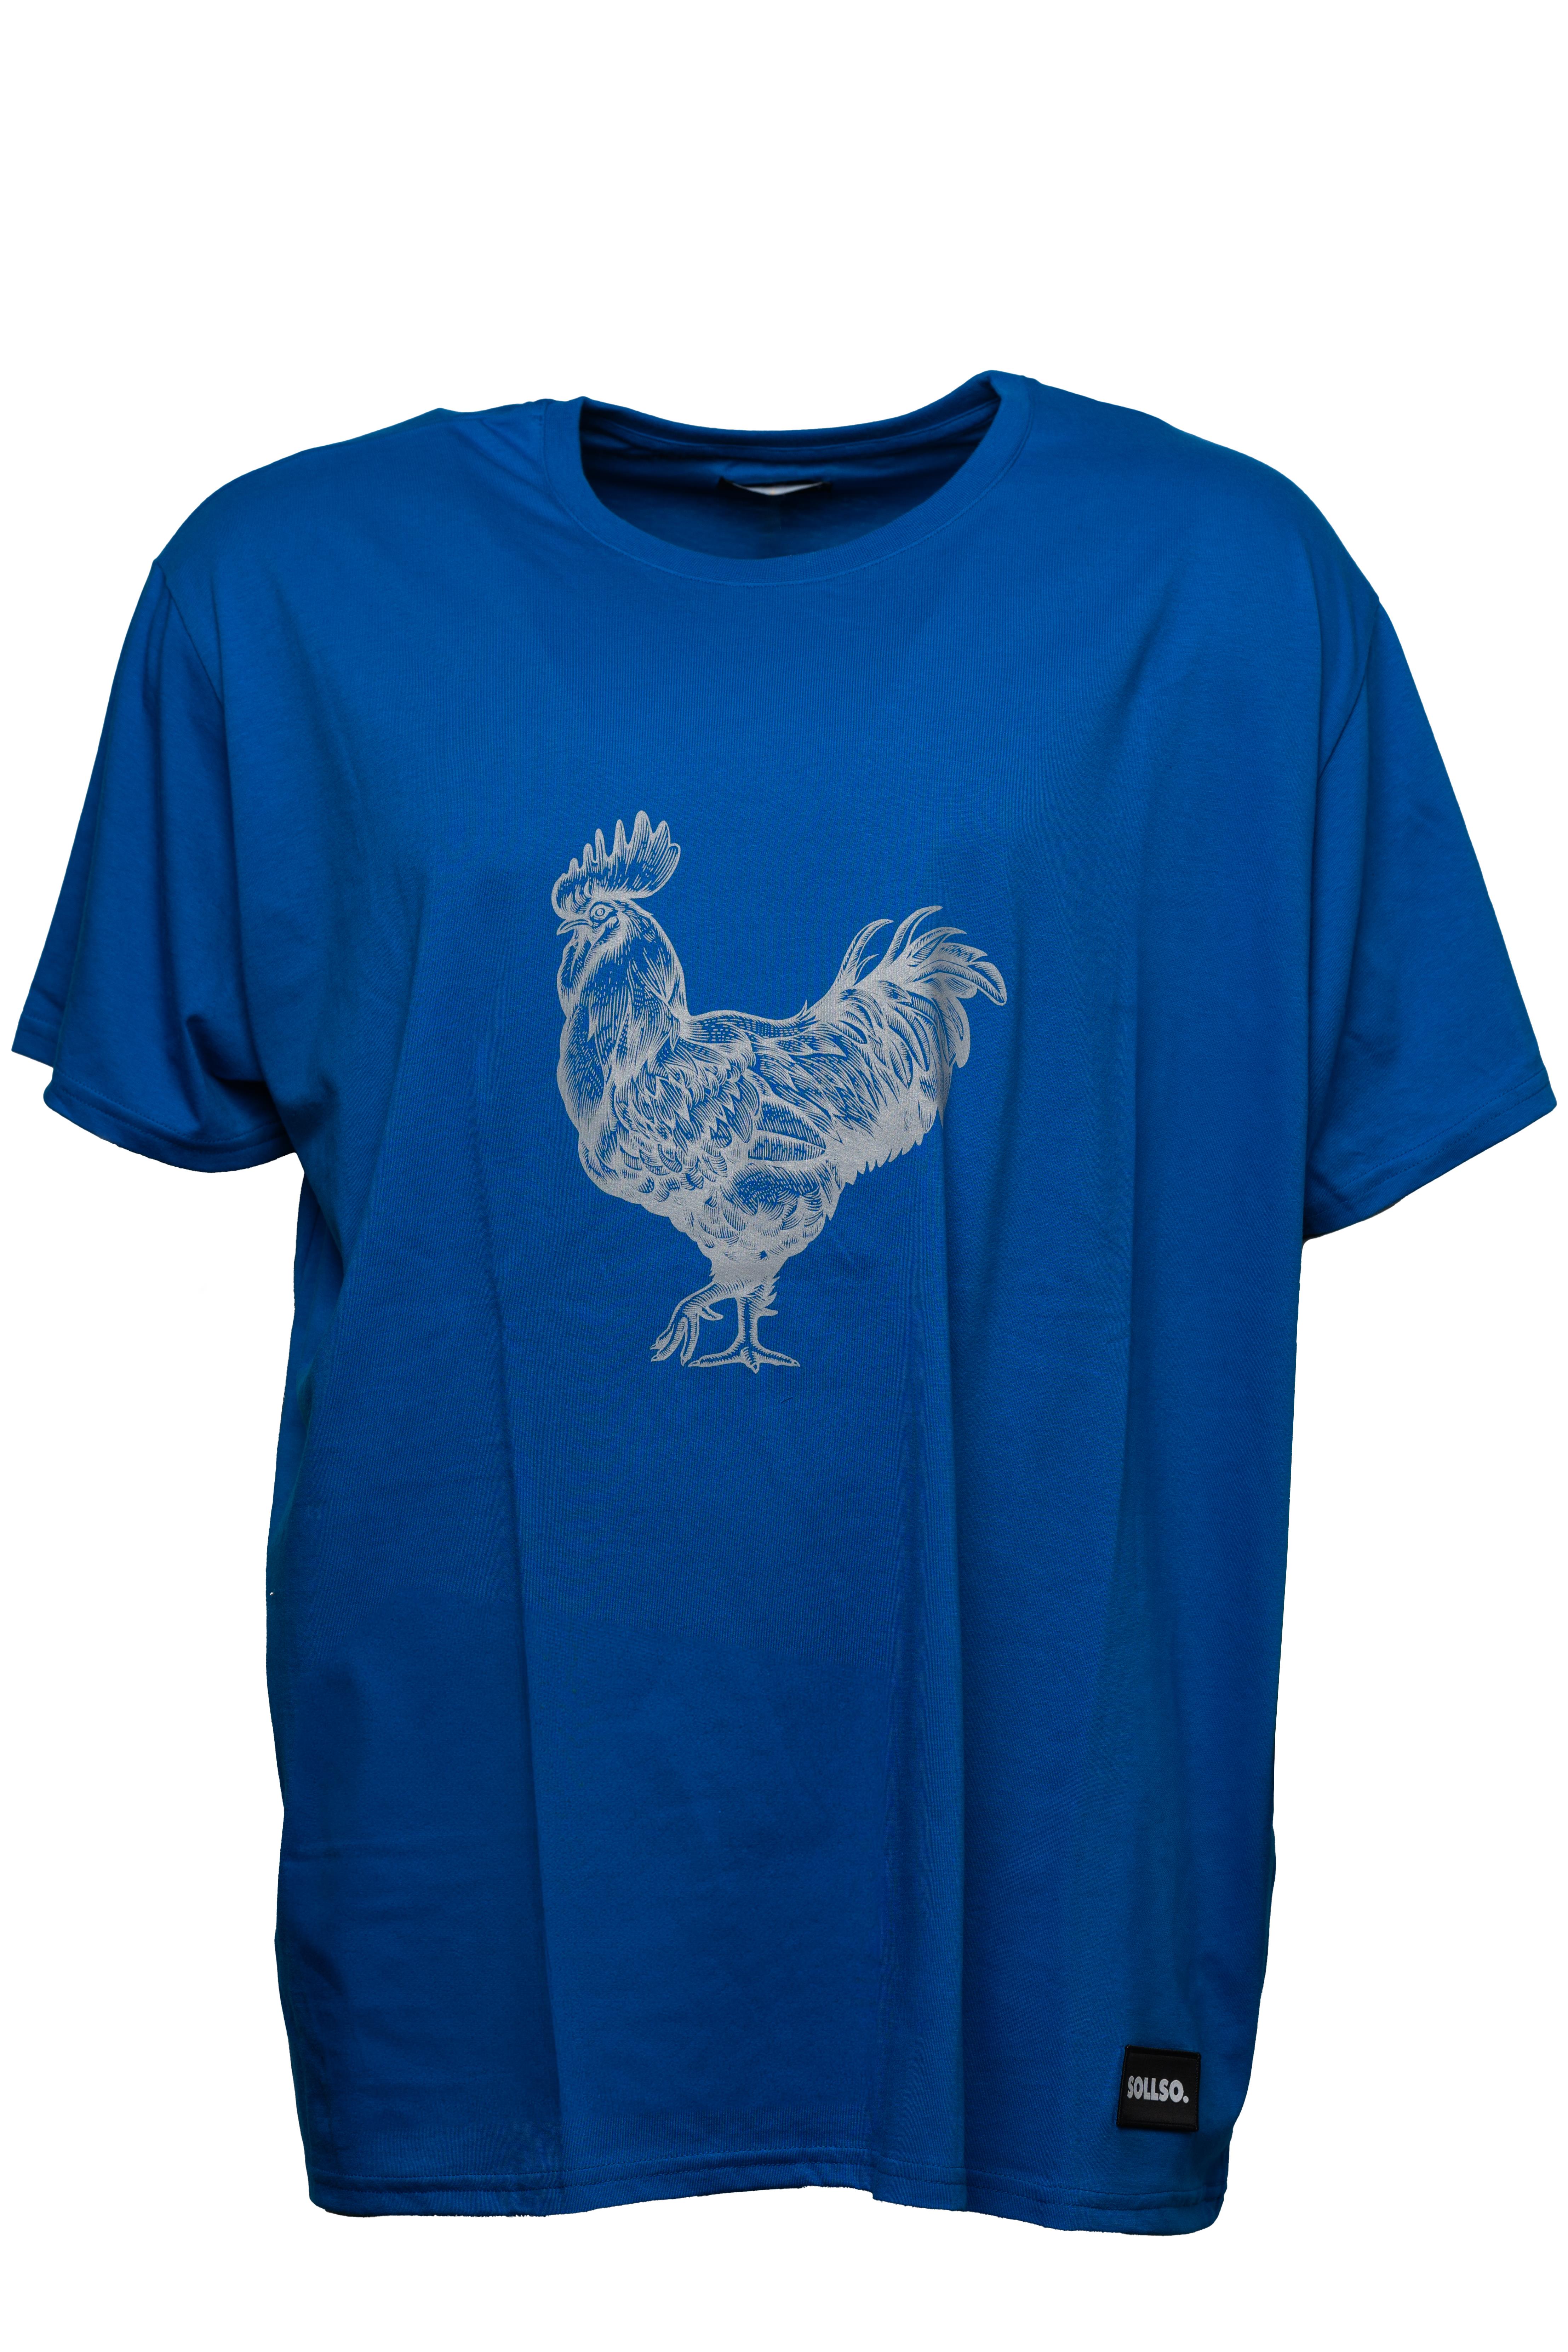 SOLLSO. T-Shirt "Rooster", Farbe Ocean Blue, Größe 7XL